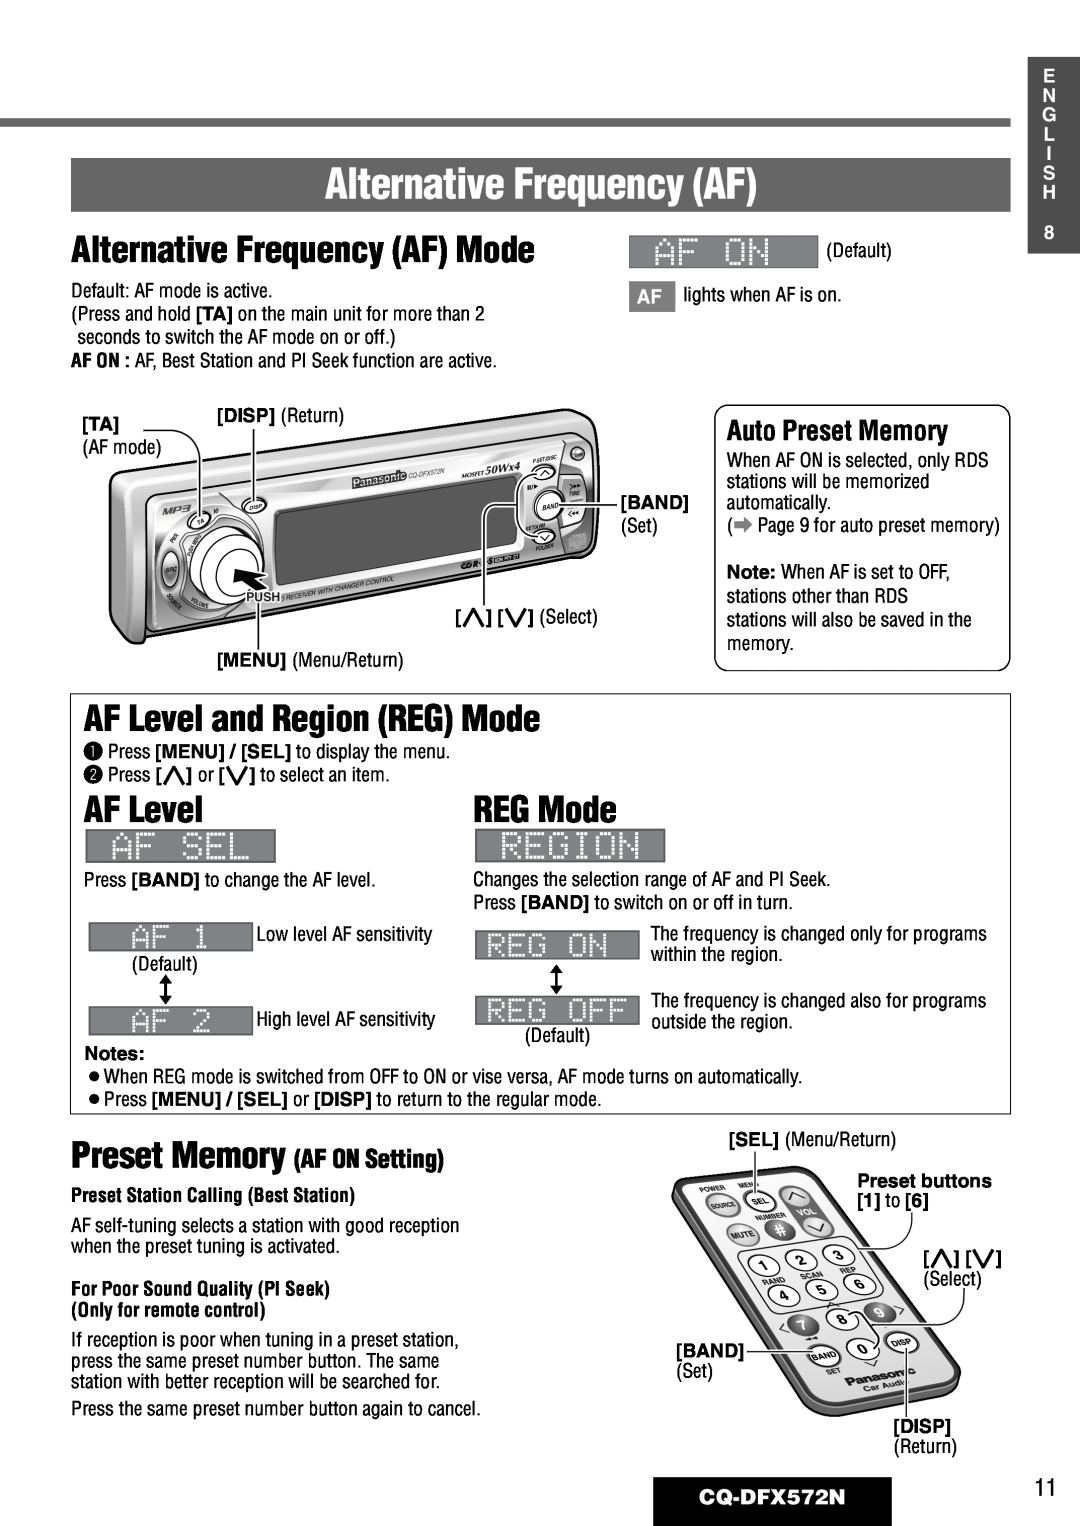 Panasonic AF Level and Region REG Mode, Alternative Frequency AF Mode, Auto Preset Memory, CQ-DFX572N11 